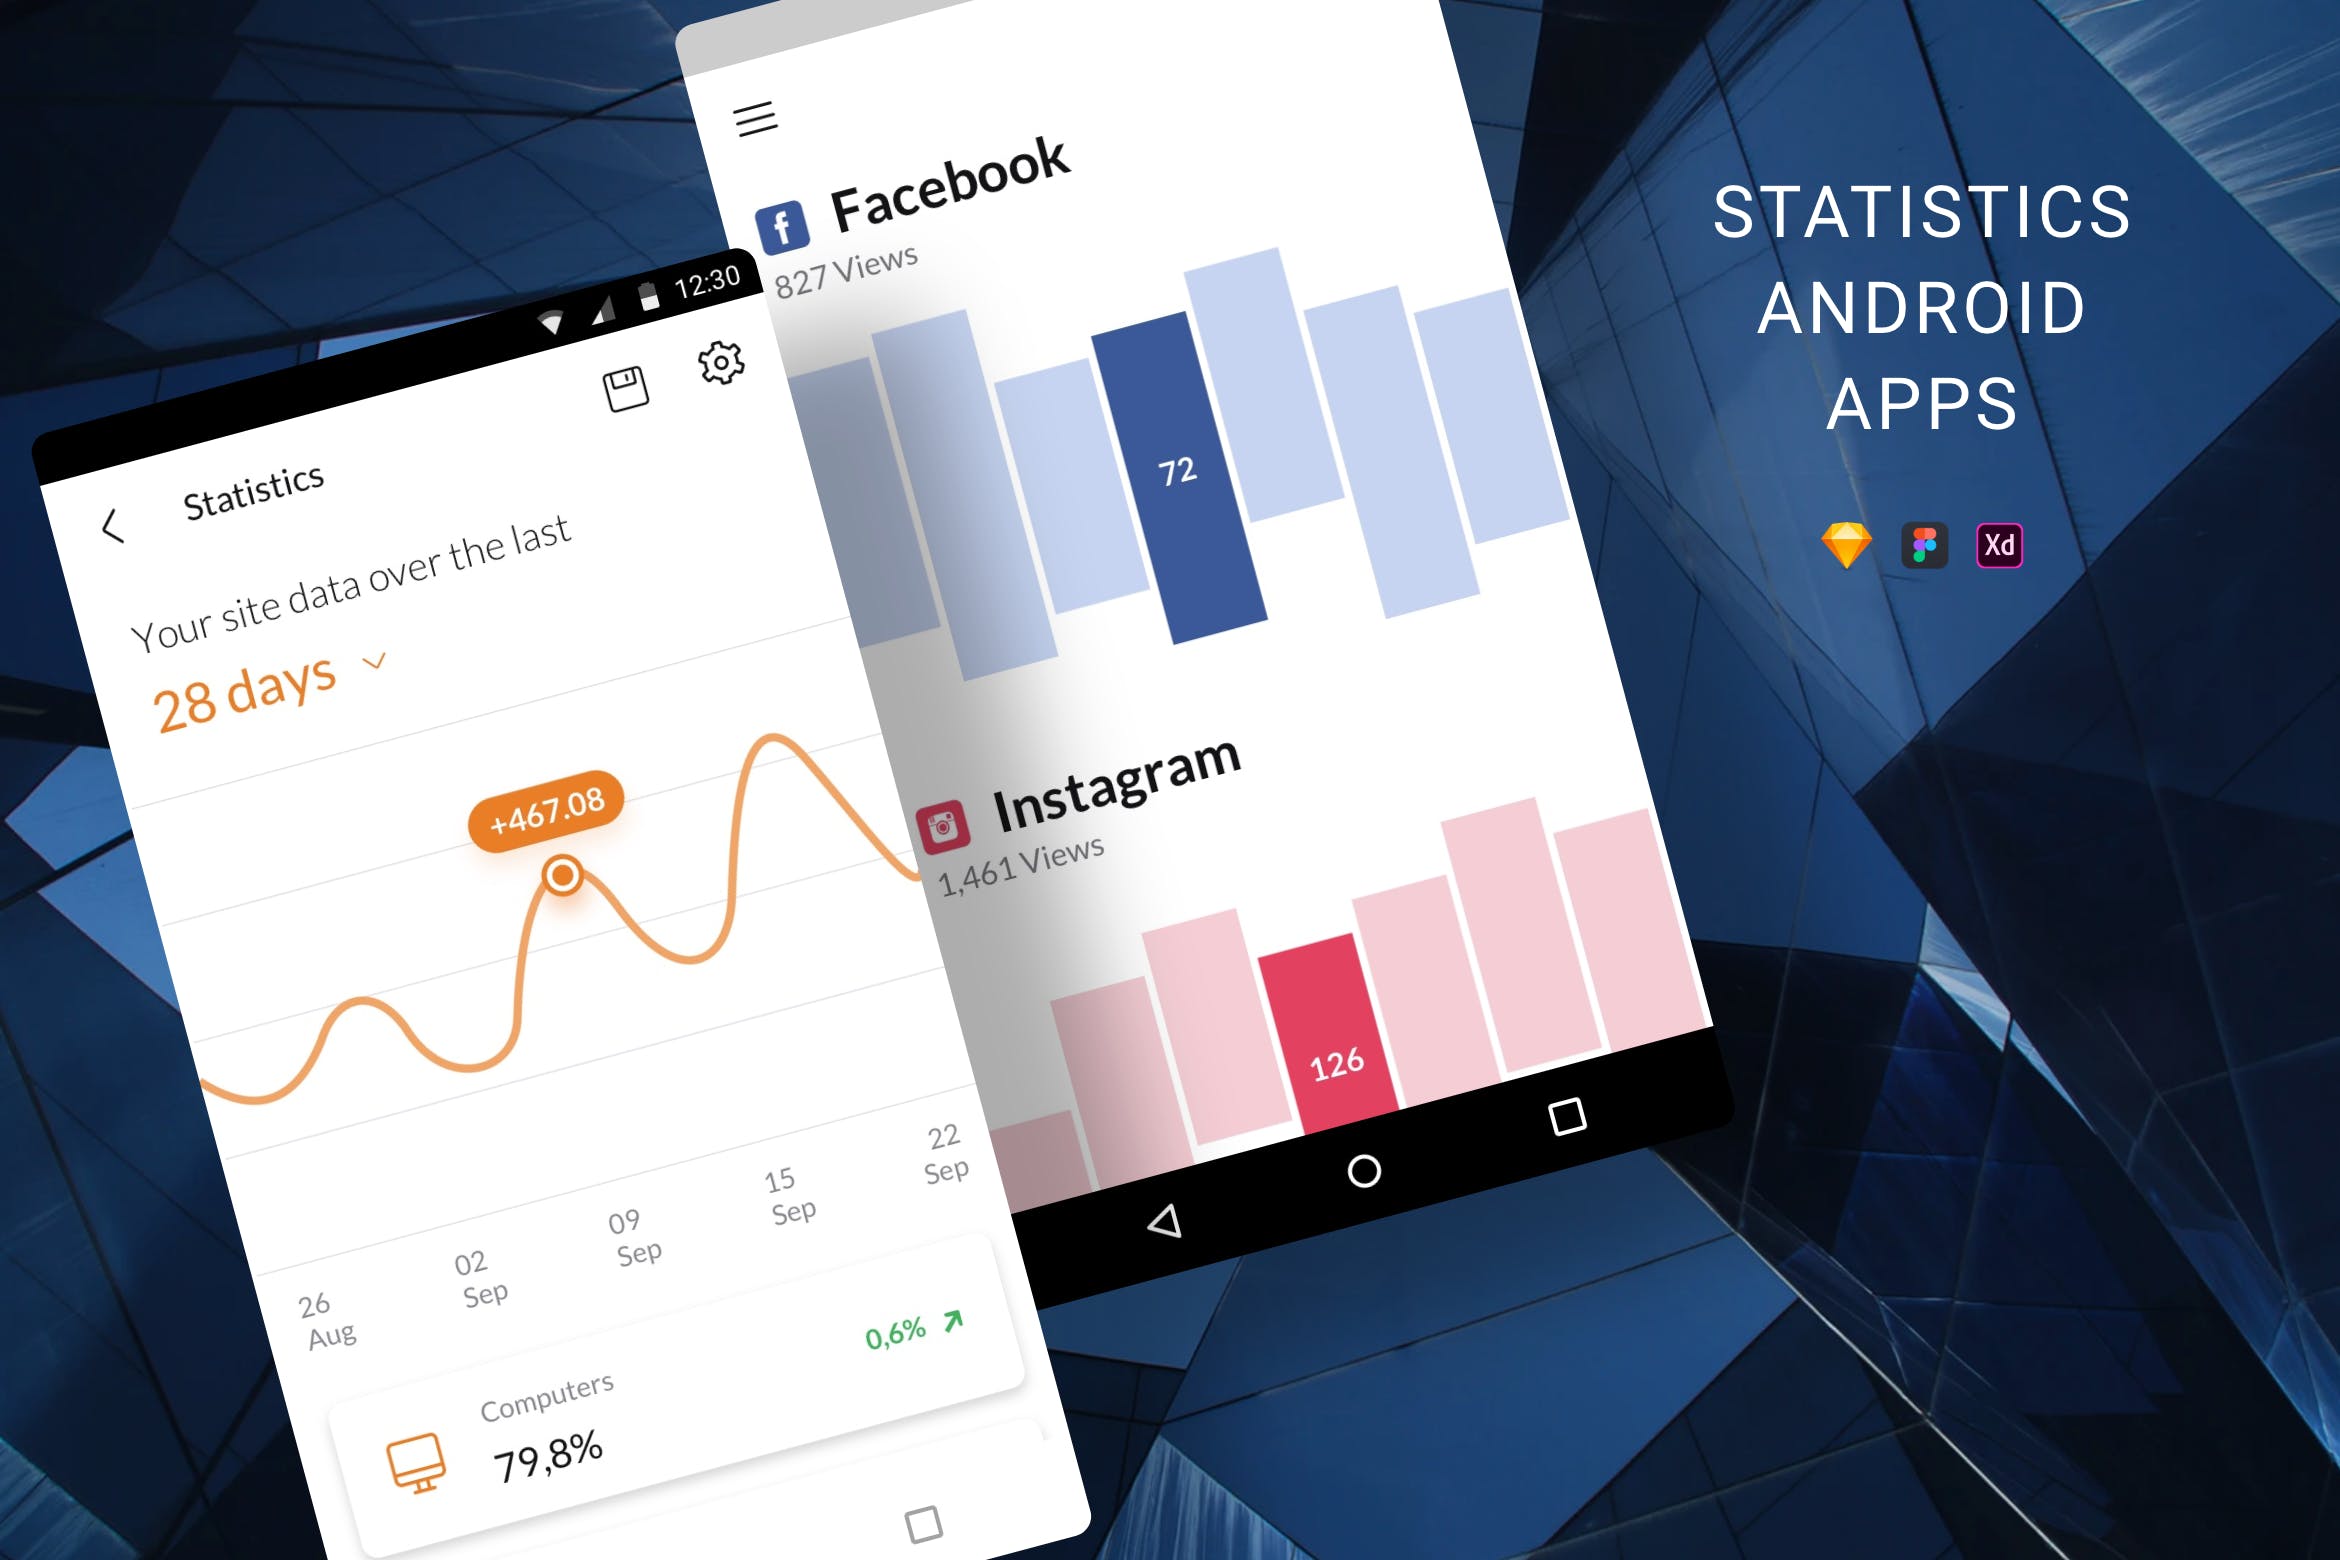 Android应用程序简约统计界面设计蚂蚁素材精选模板 Statistics Android Apps插图